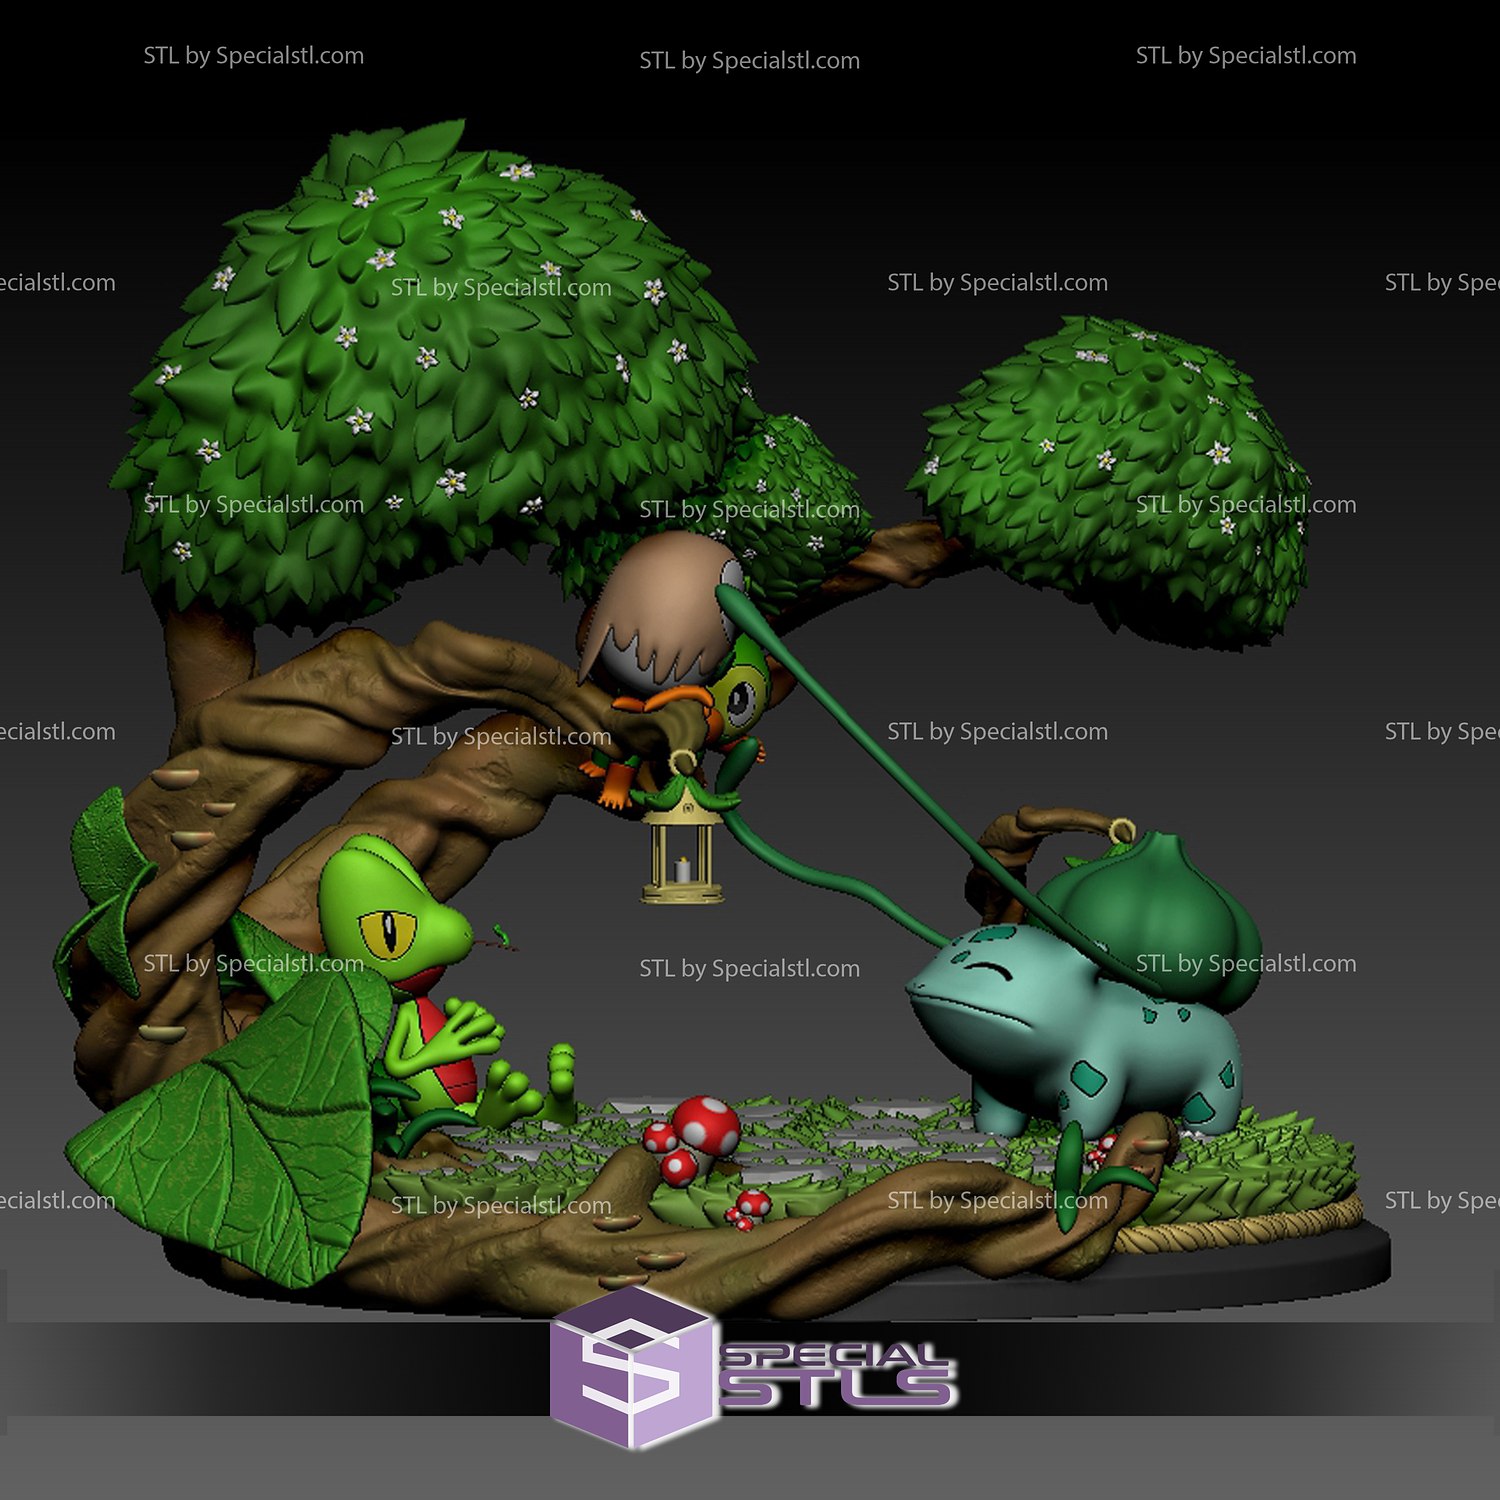 Bulbasaur Treecko Rowlet and Grookey 3D Printing Figurine Pokemon STL Files